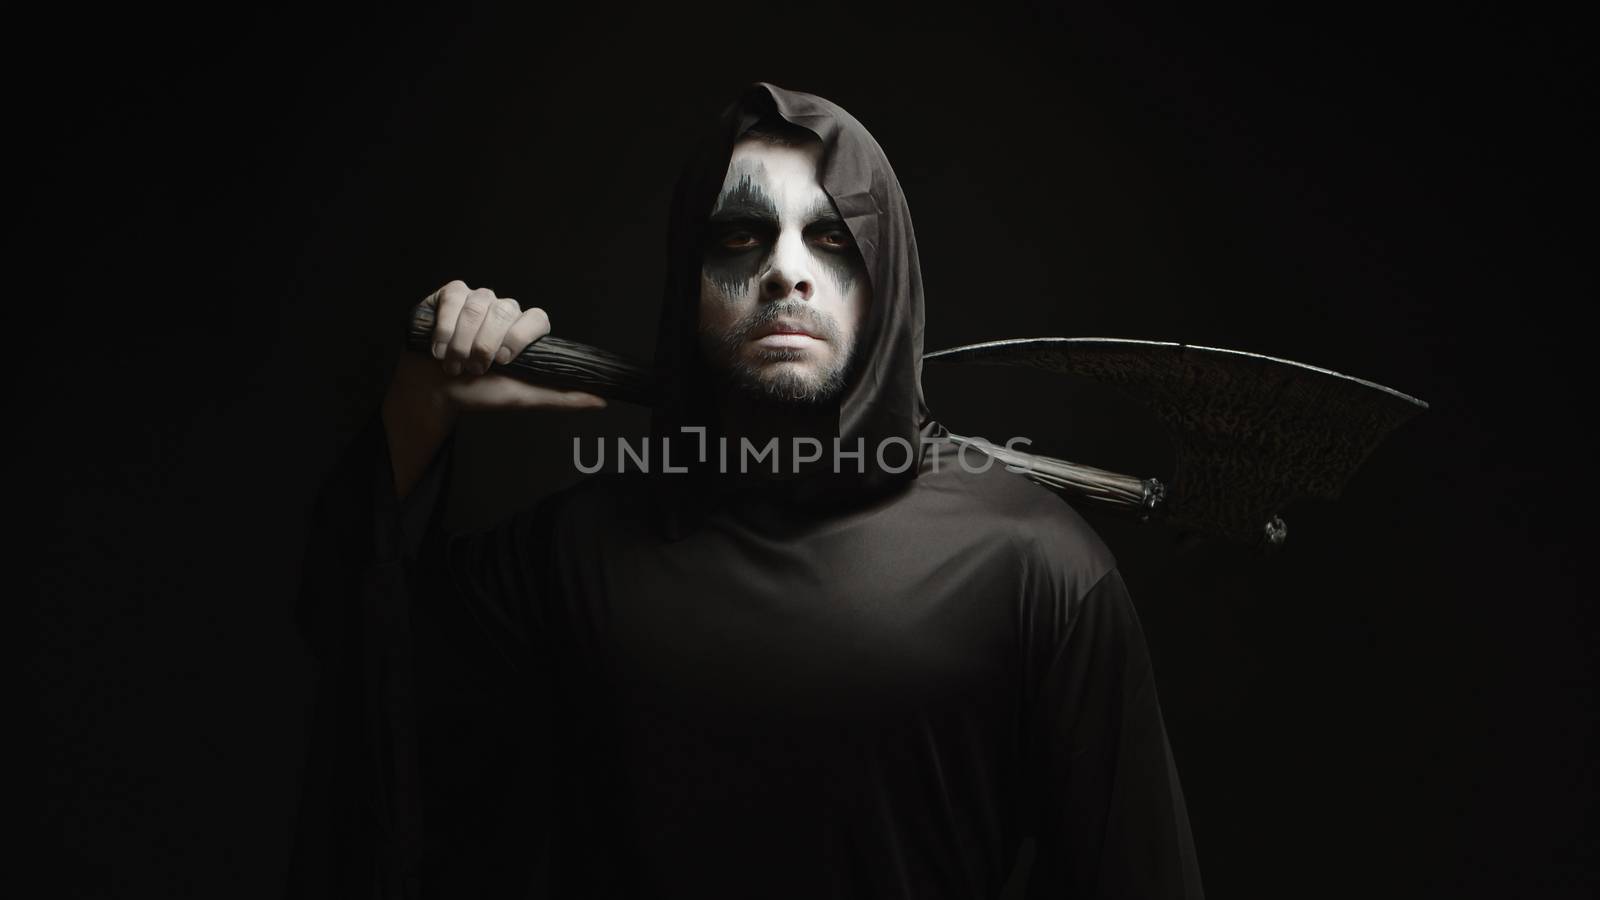 Grim reaper over black background with axe in his hands by DCStudio